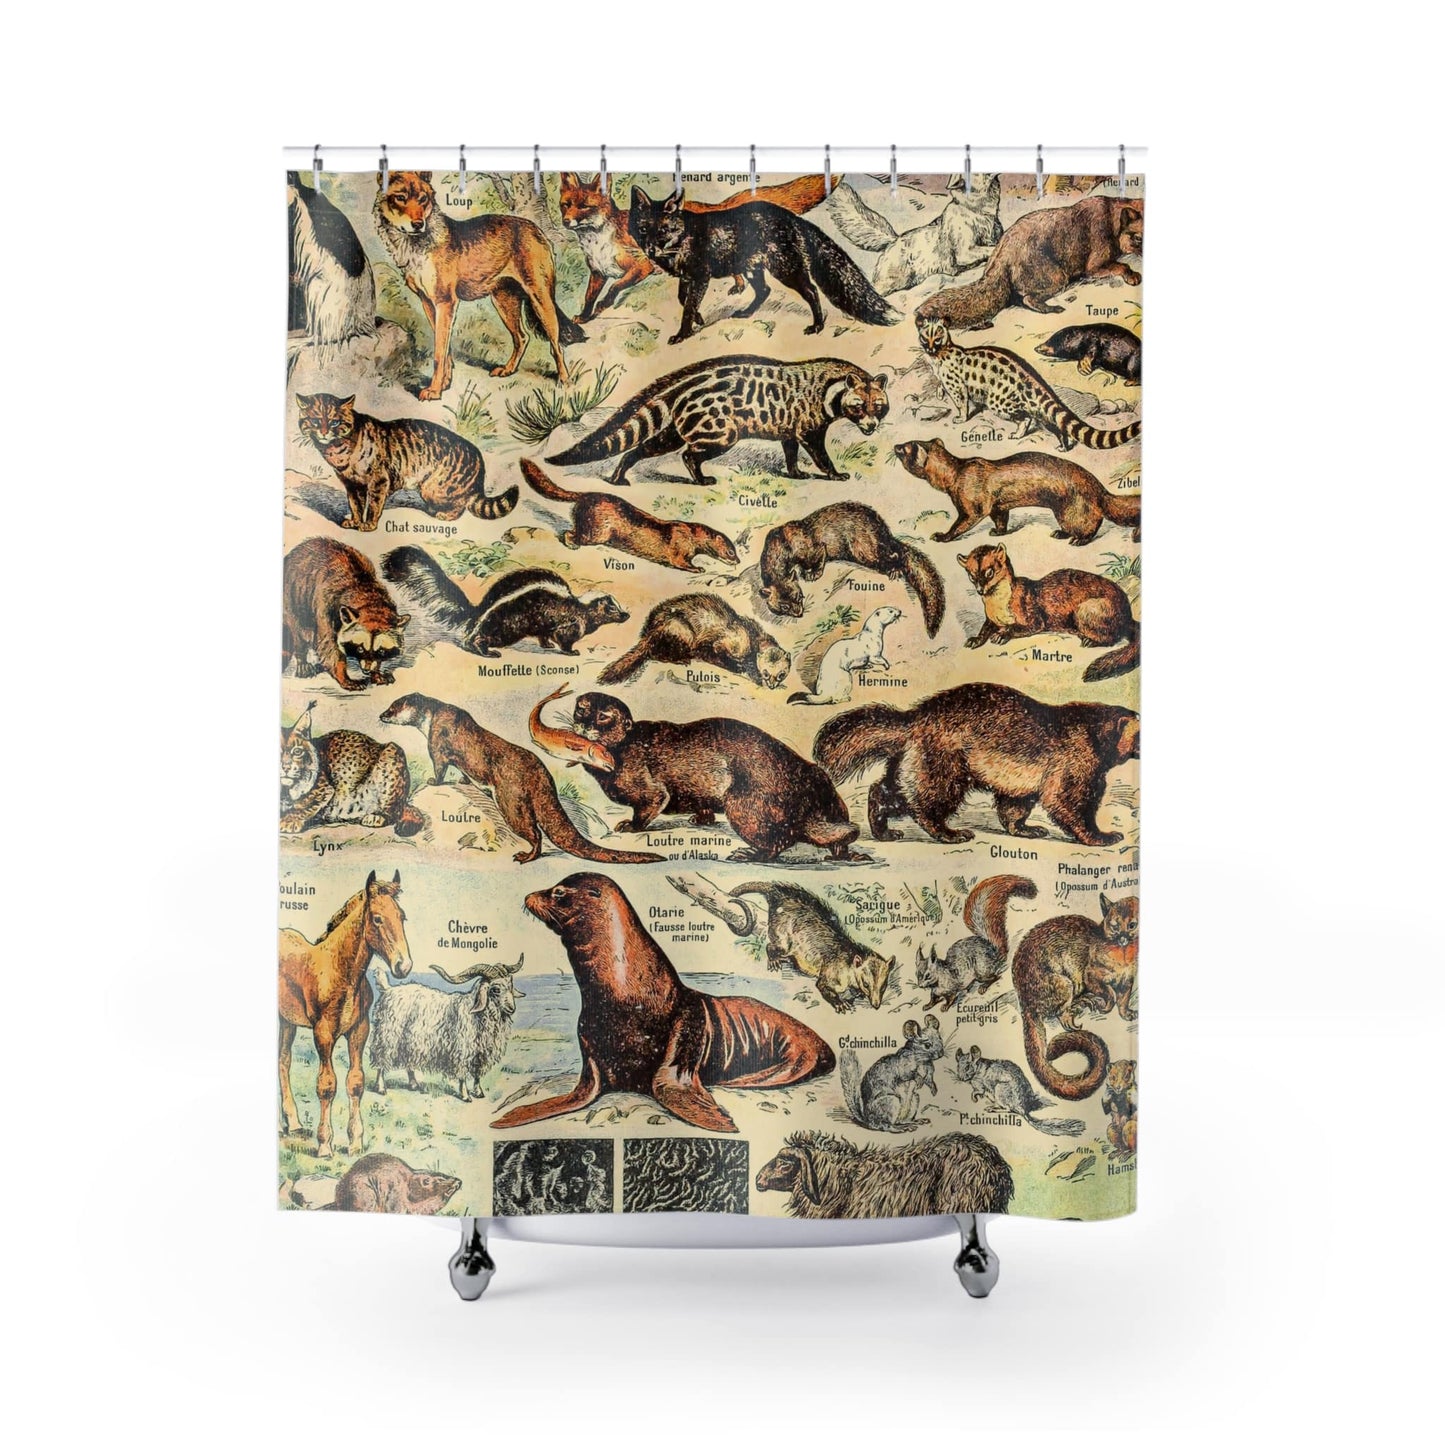 Wild Animals Shower Curtain with cute animal chart design, playful bathroom decor showcasing charming animal illustrations.